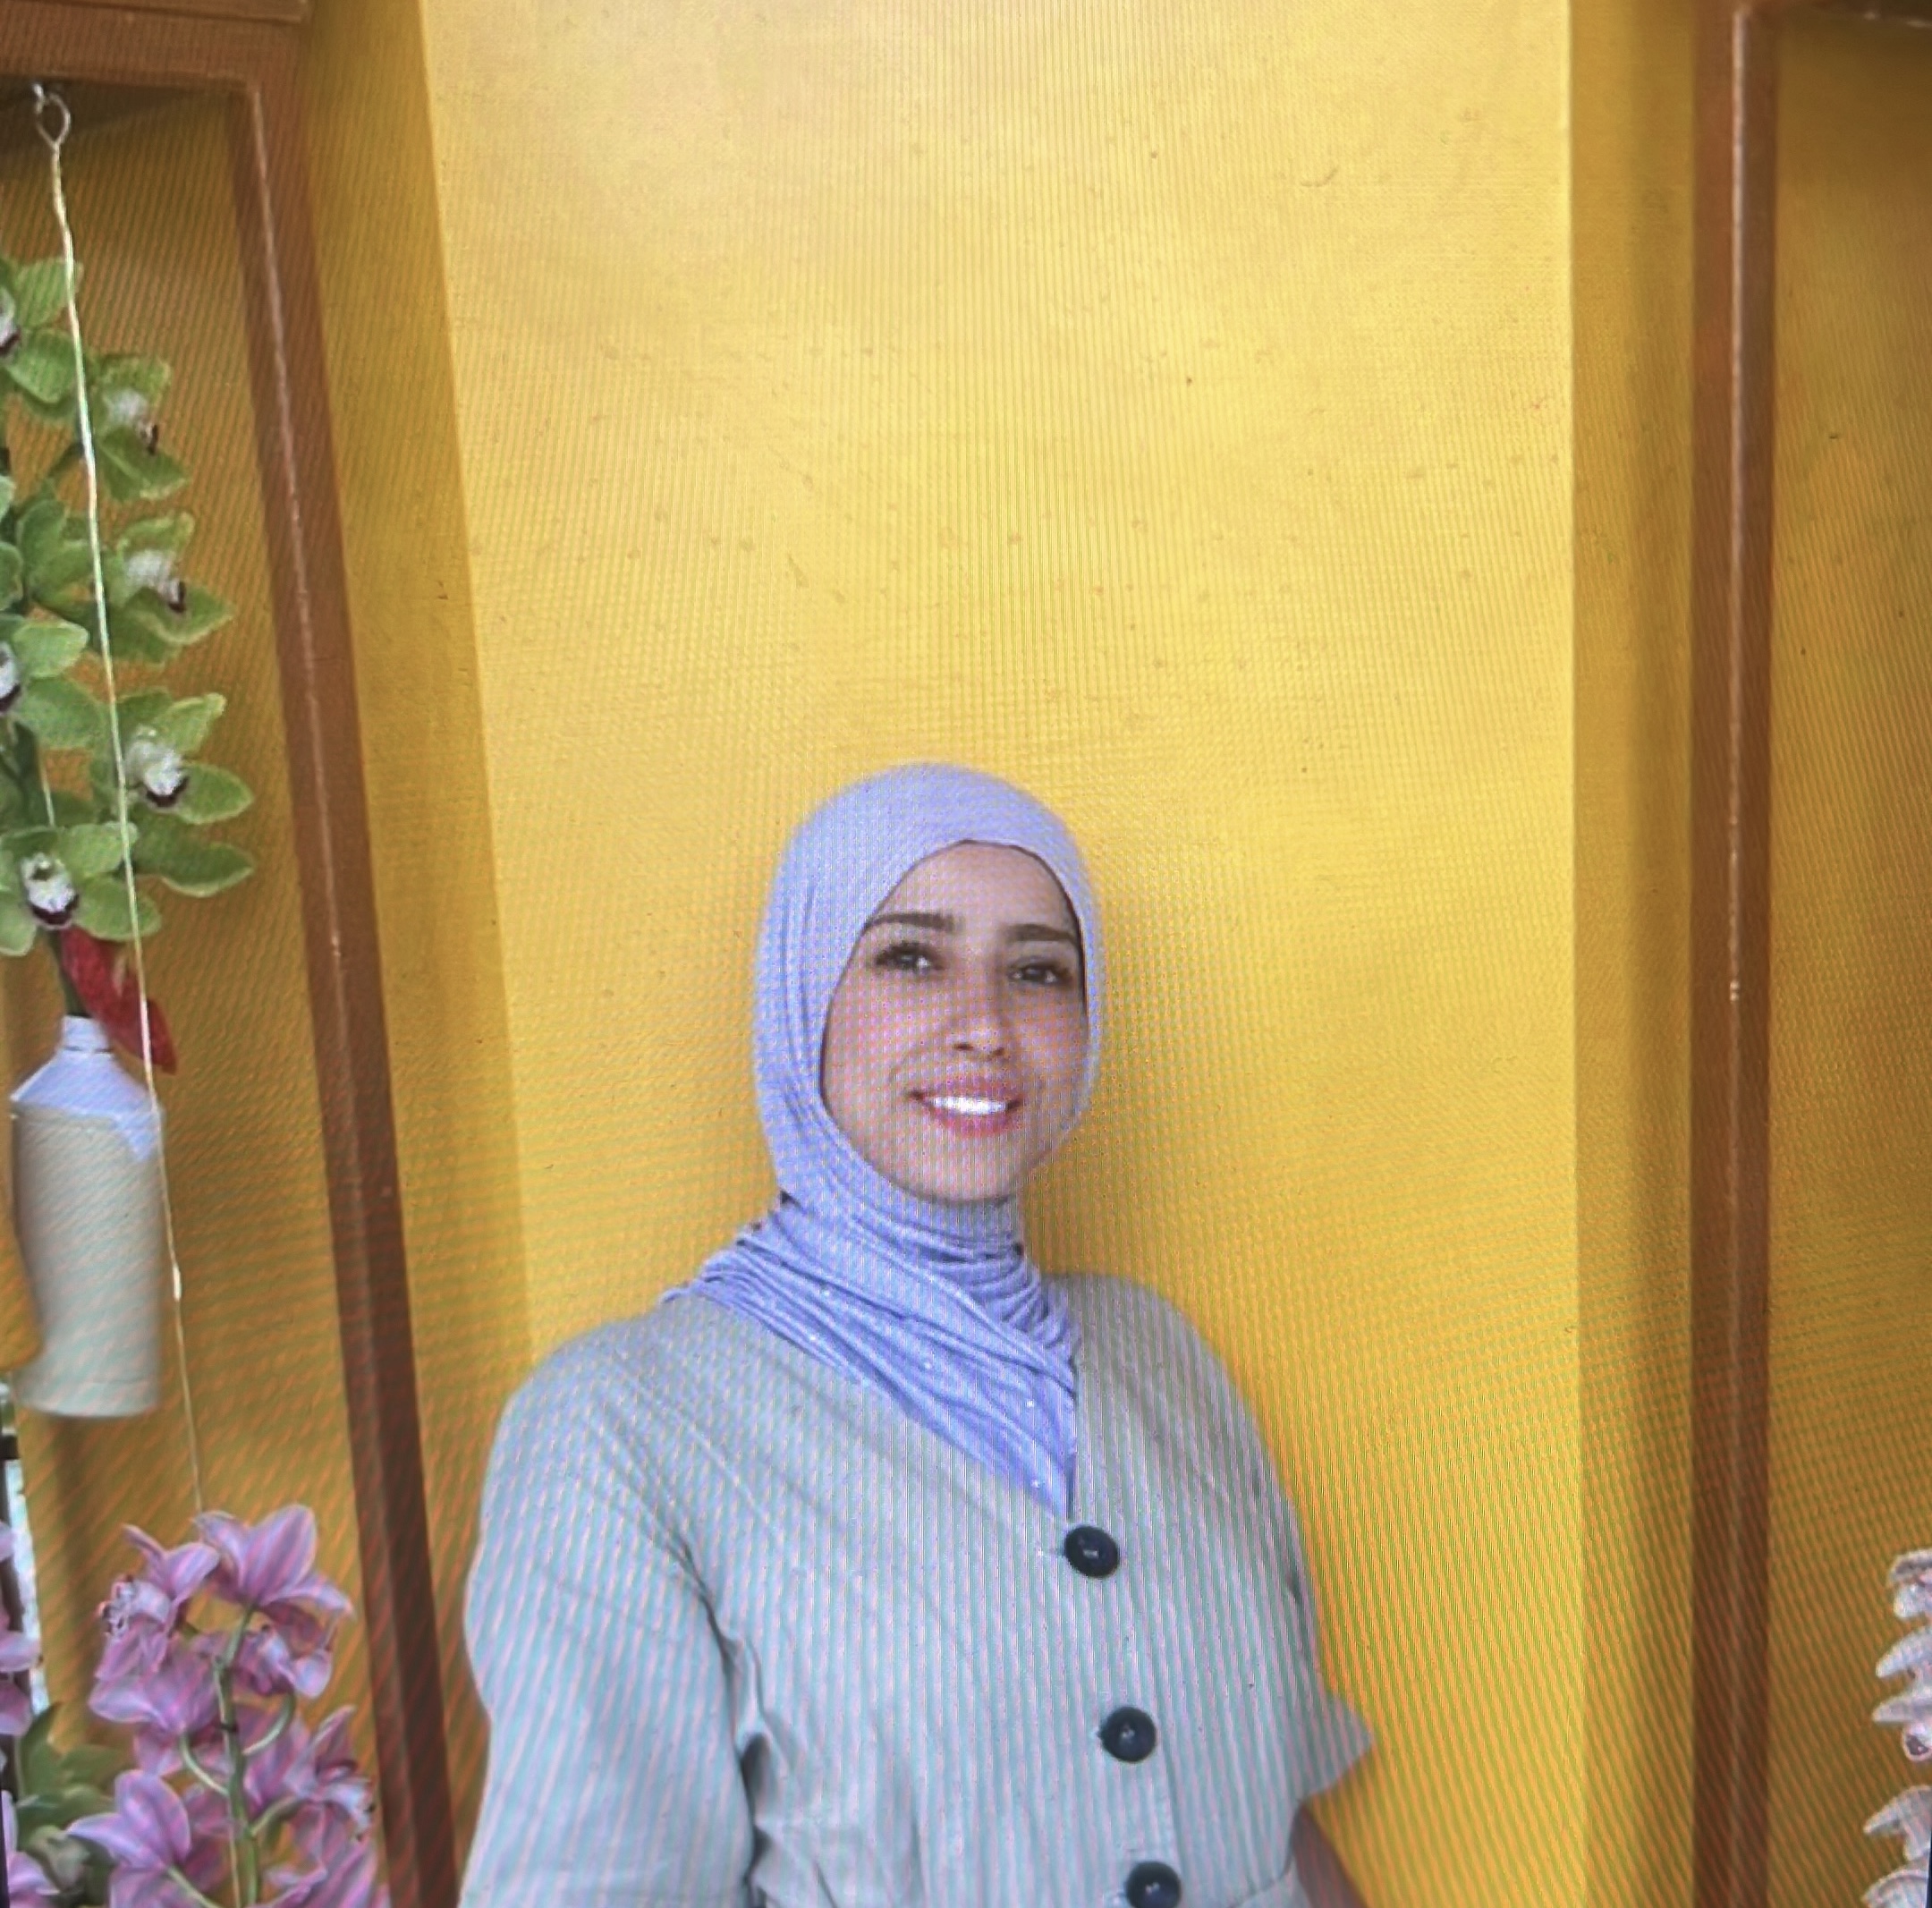 Profile picture for user salouaahammoud